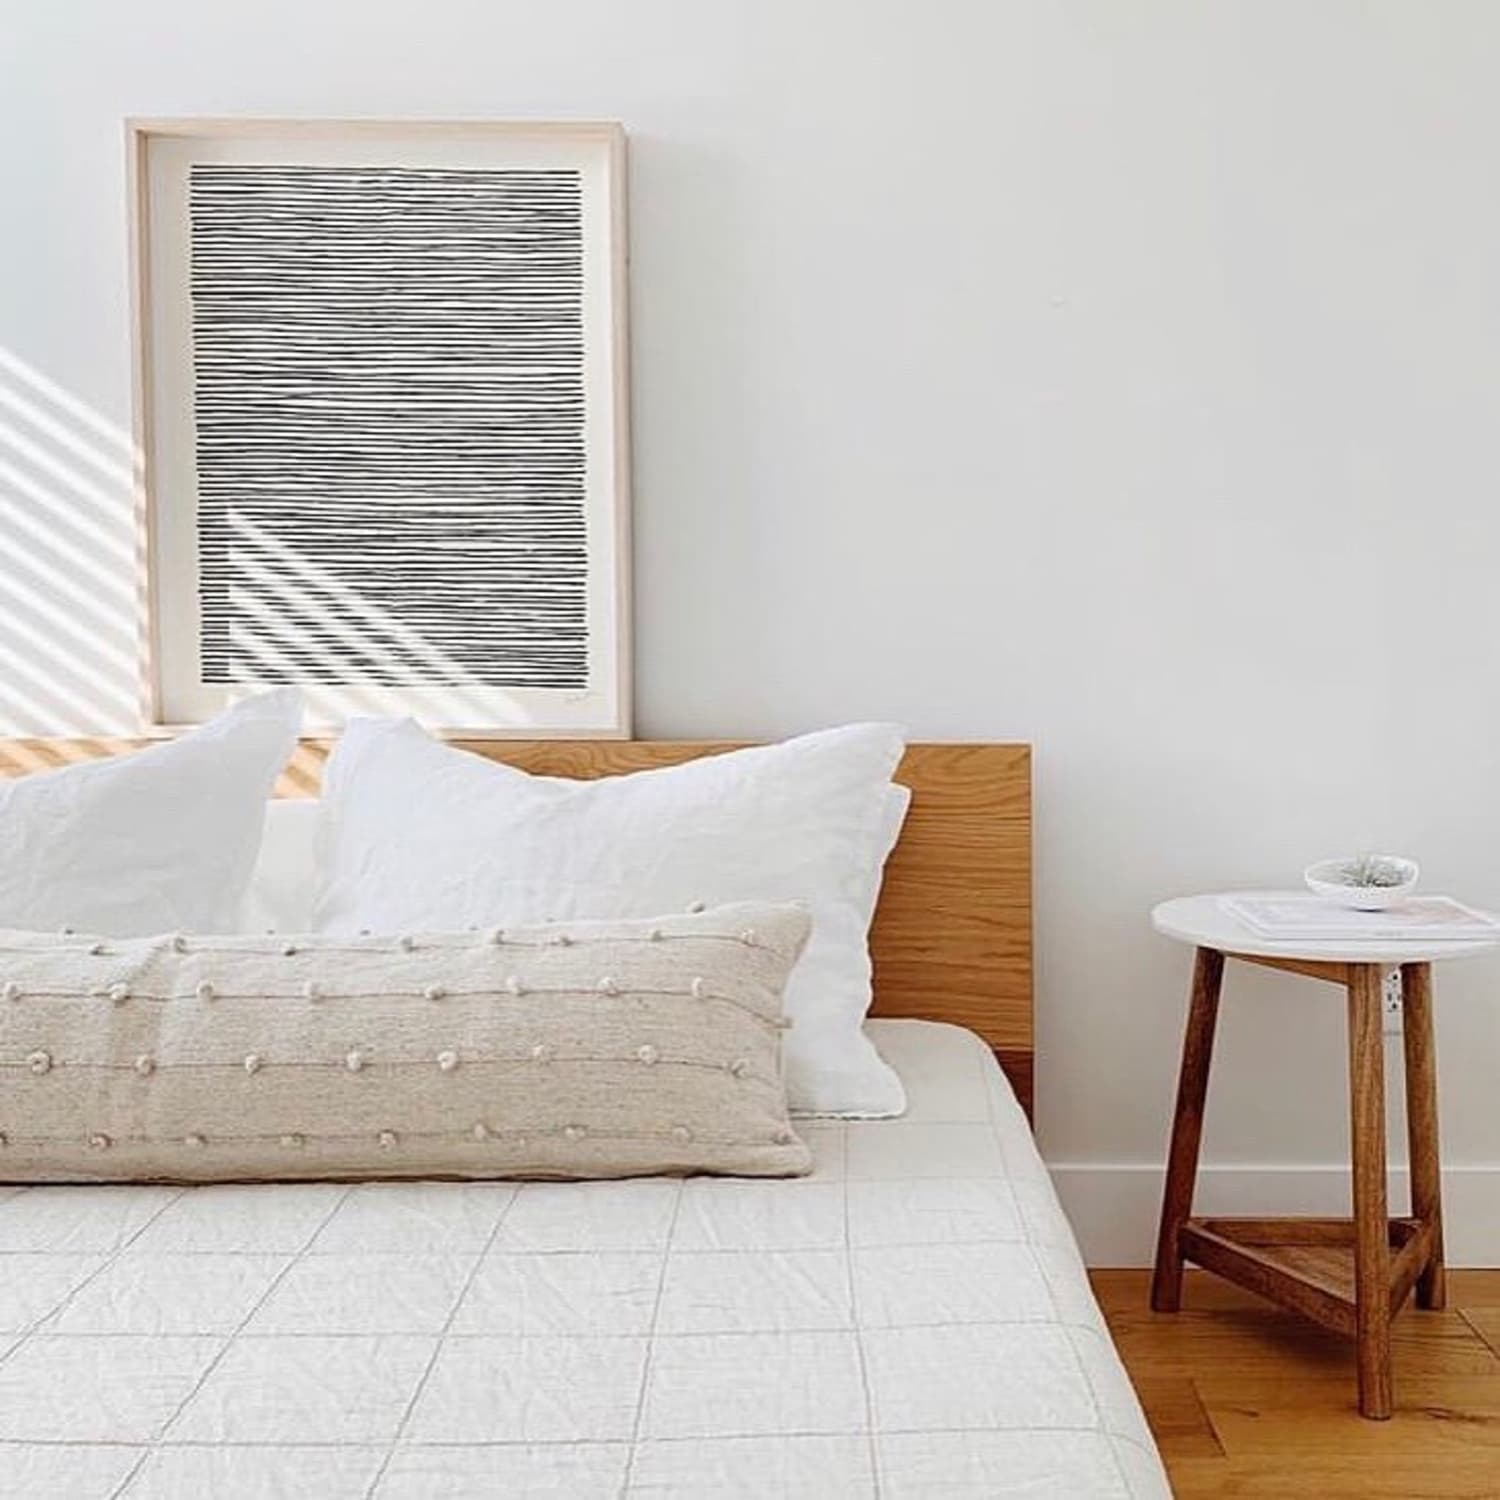 11 Long Lumbar Pillows for a Stylish Bed